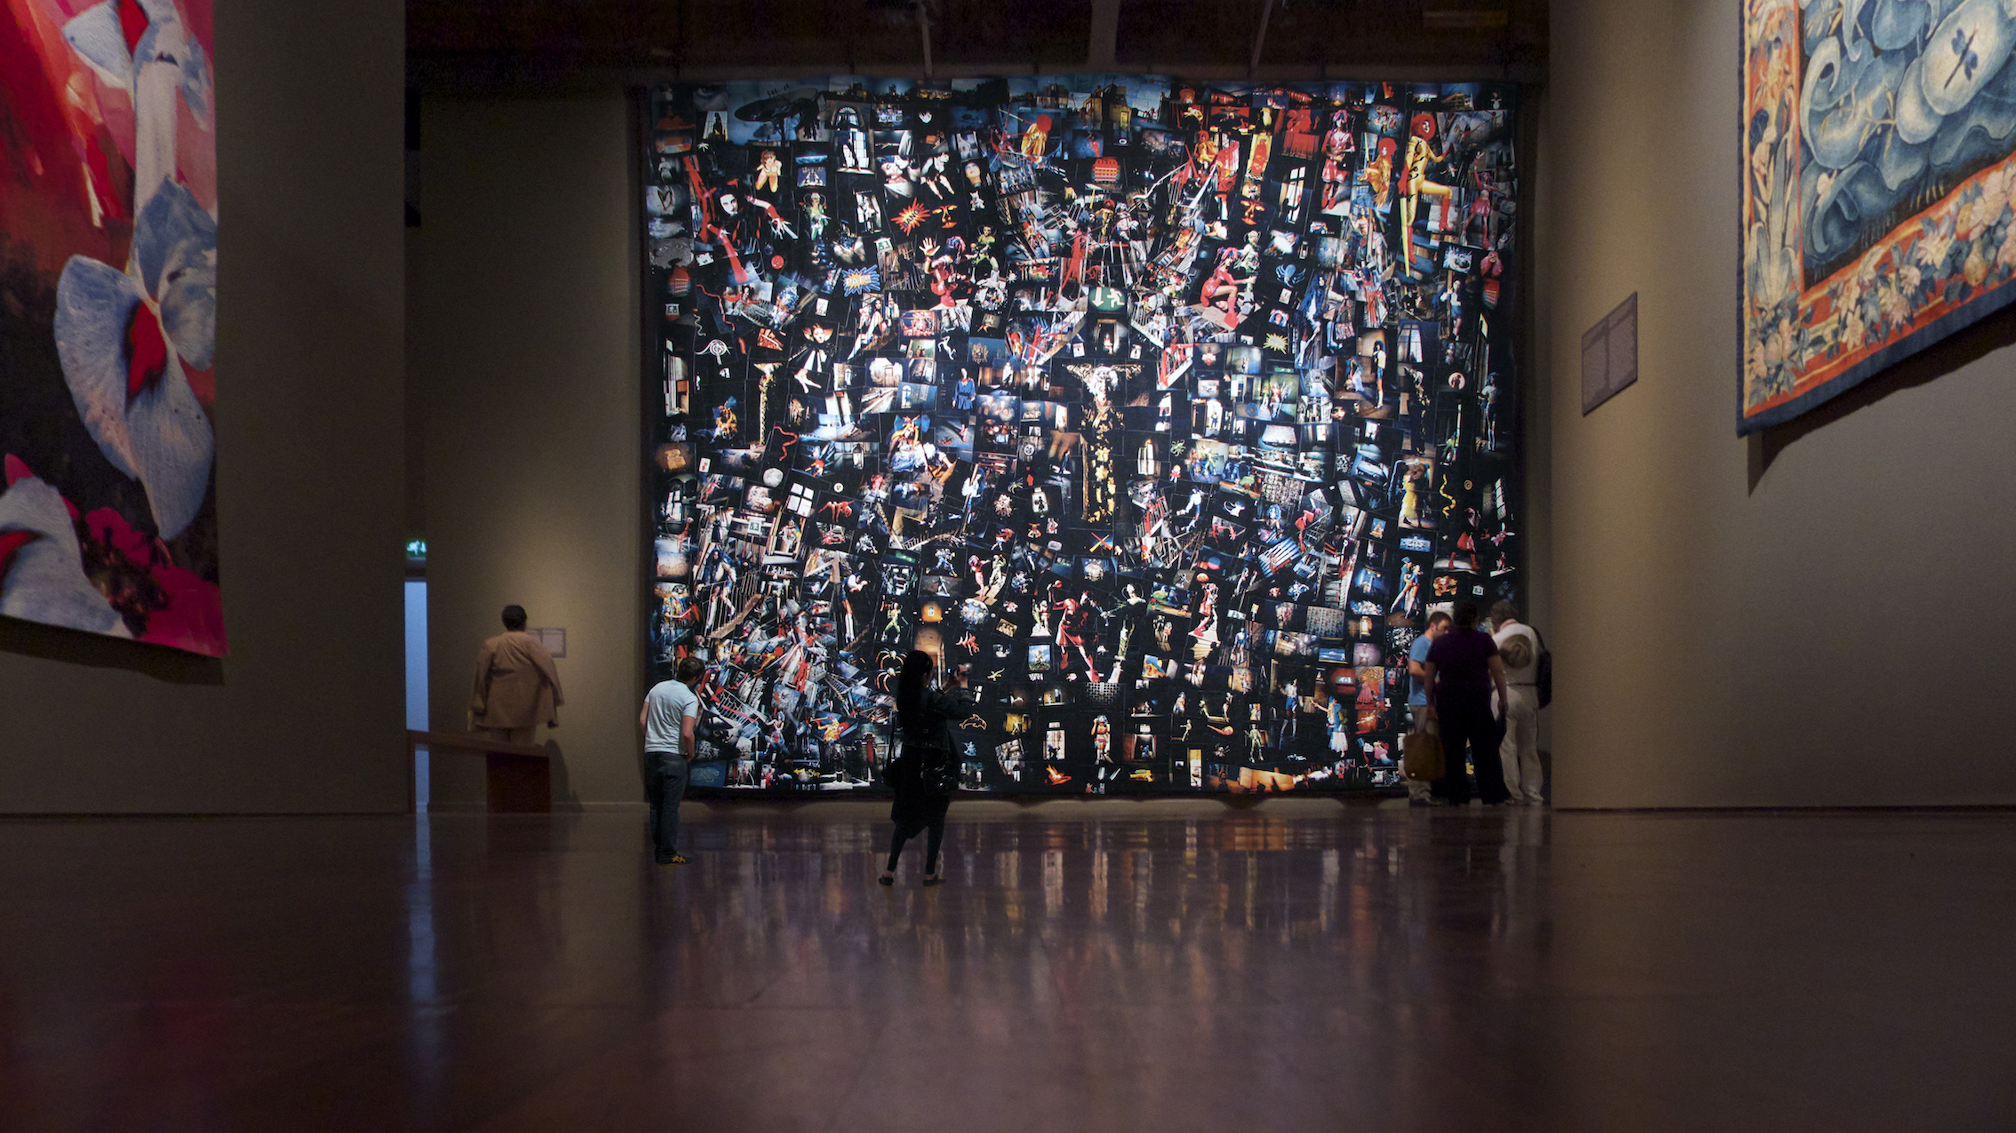 SANDOUK EL DOUNIA, 2011, Digitally woven tapestry, Venice Biennale, Fundazione Cini, Italy.